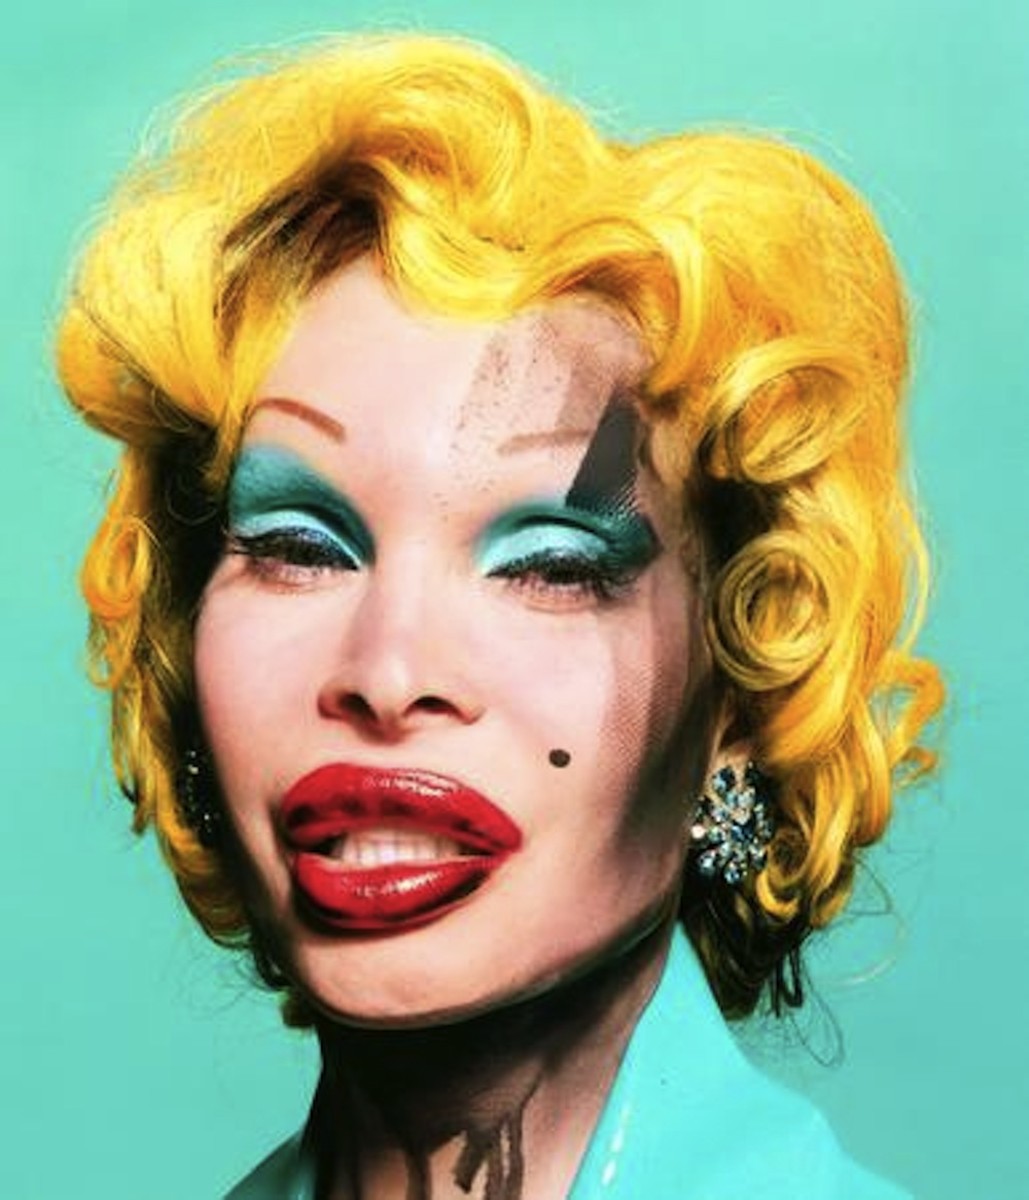 "Amanda as Marilyn" by modern pop artist David LaChapelle